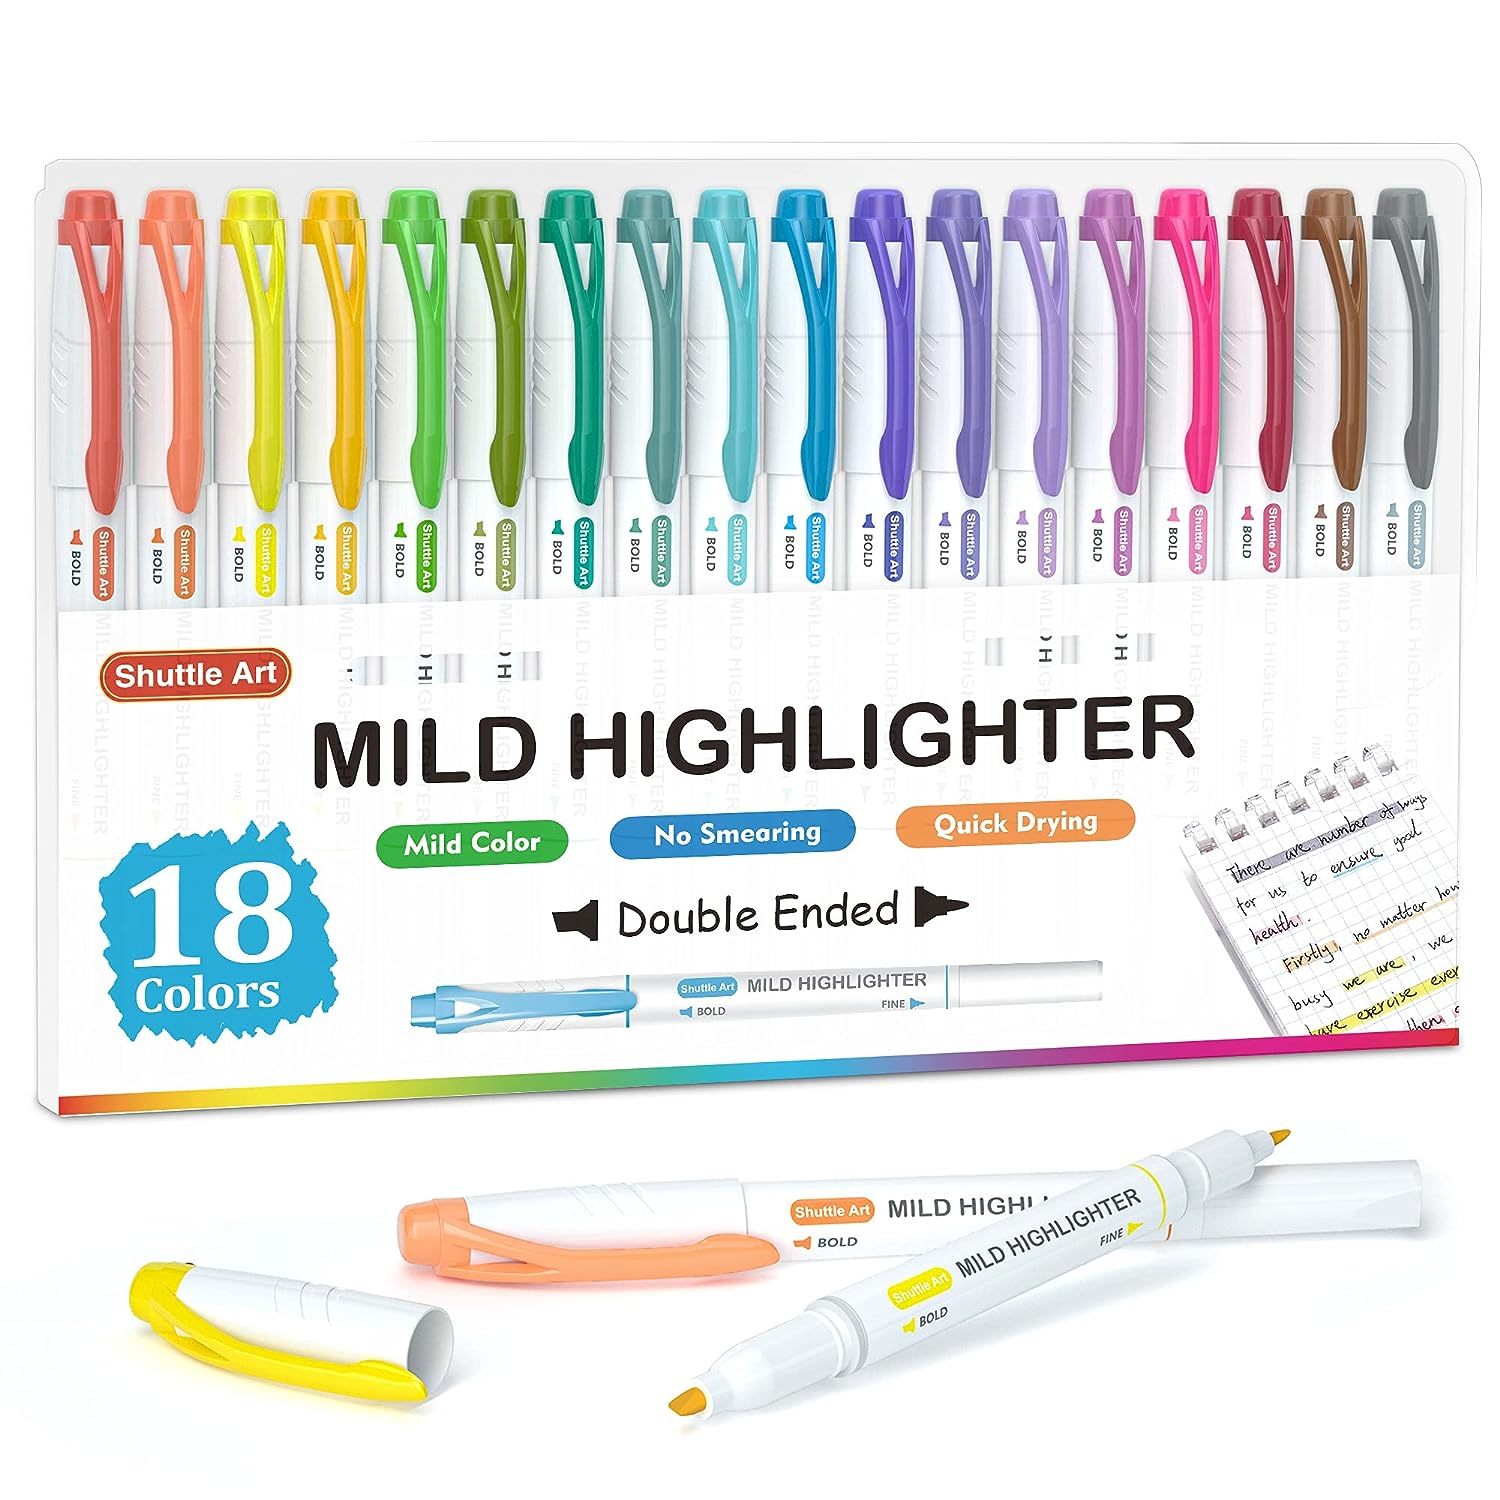 Sharpie Pocket style Highlighters Assorted Colors 4 Pens Plus 2 Bonus